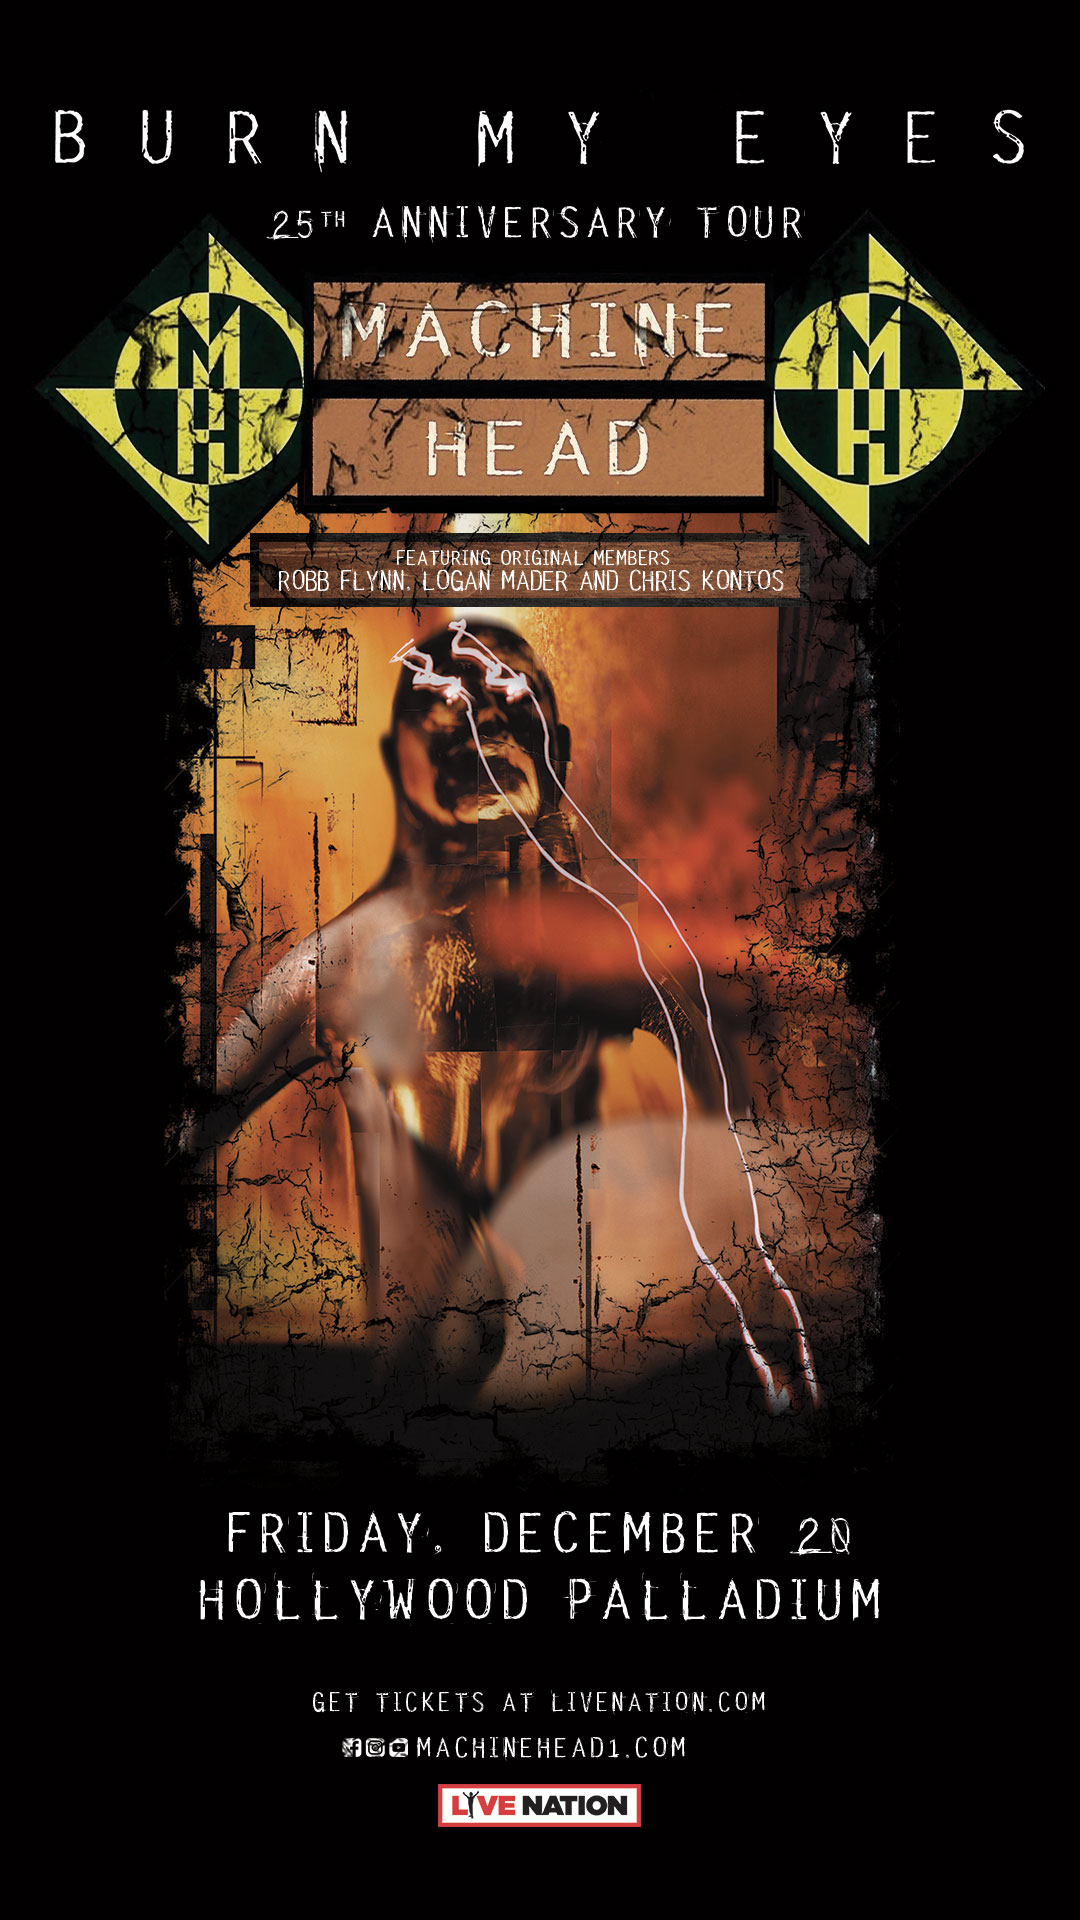 MACHINE HEAD Announce Burn My Eyes 25th Anniversary Show At The Hollywood Palladium!